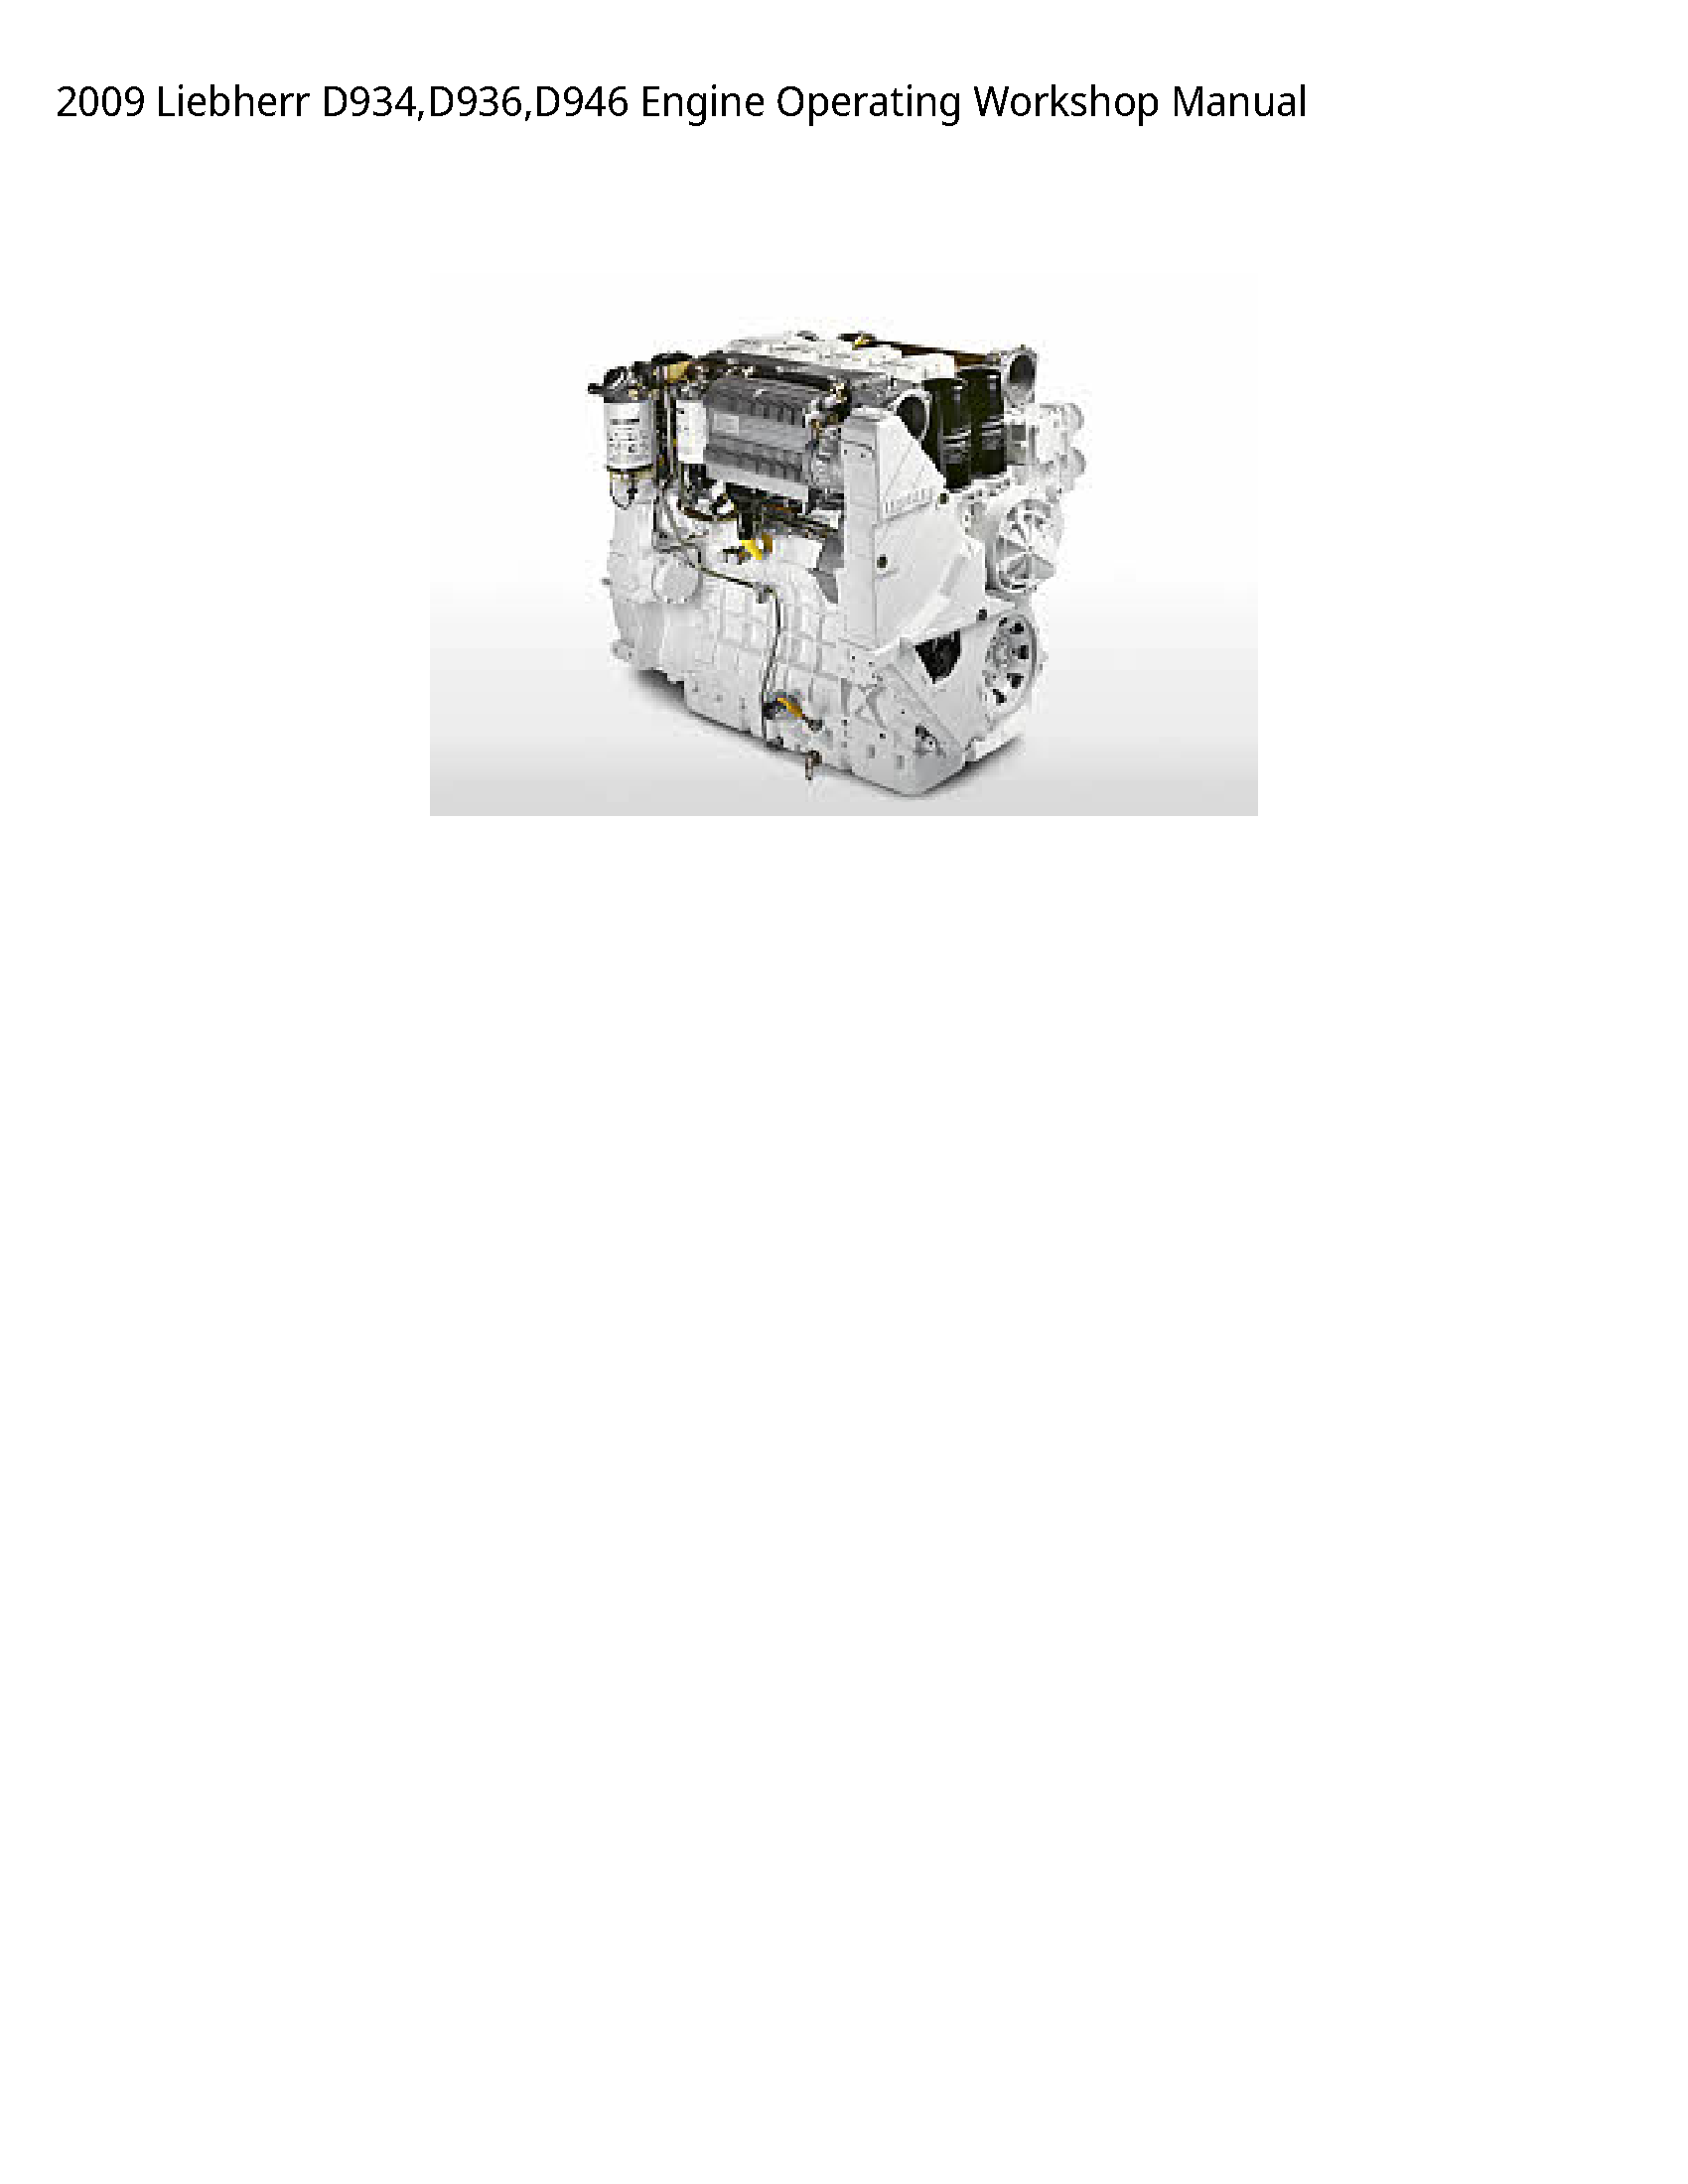 Liebherr D934 Engine manual